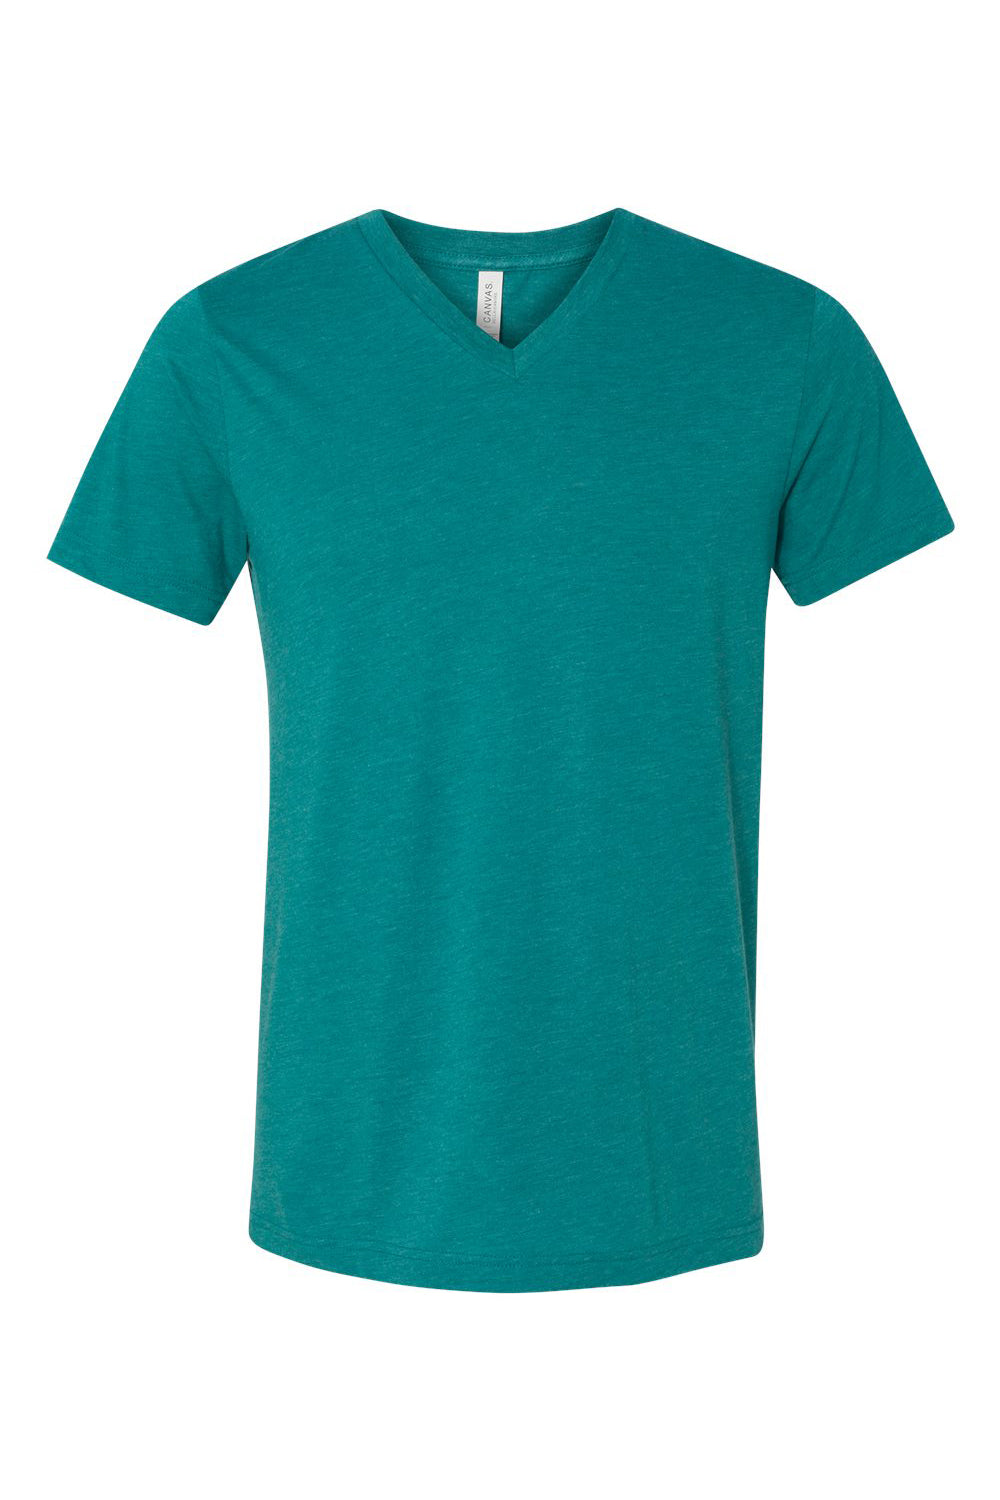 Bella + Canvas BC3415/3415C/3415 Mens Short Sleeve V-Neck T-Shirt Teal Green Flat Front